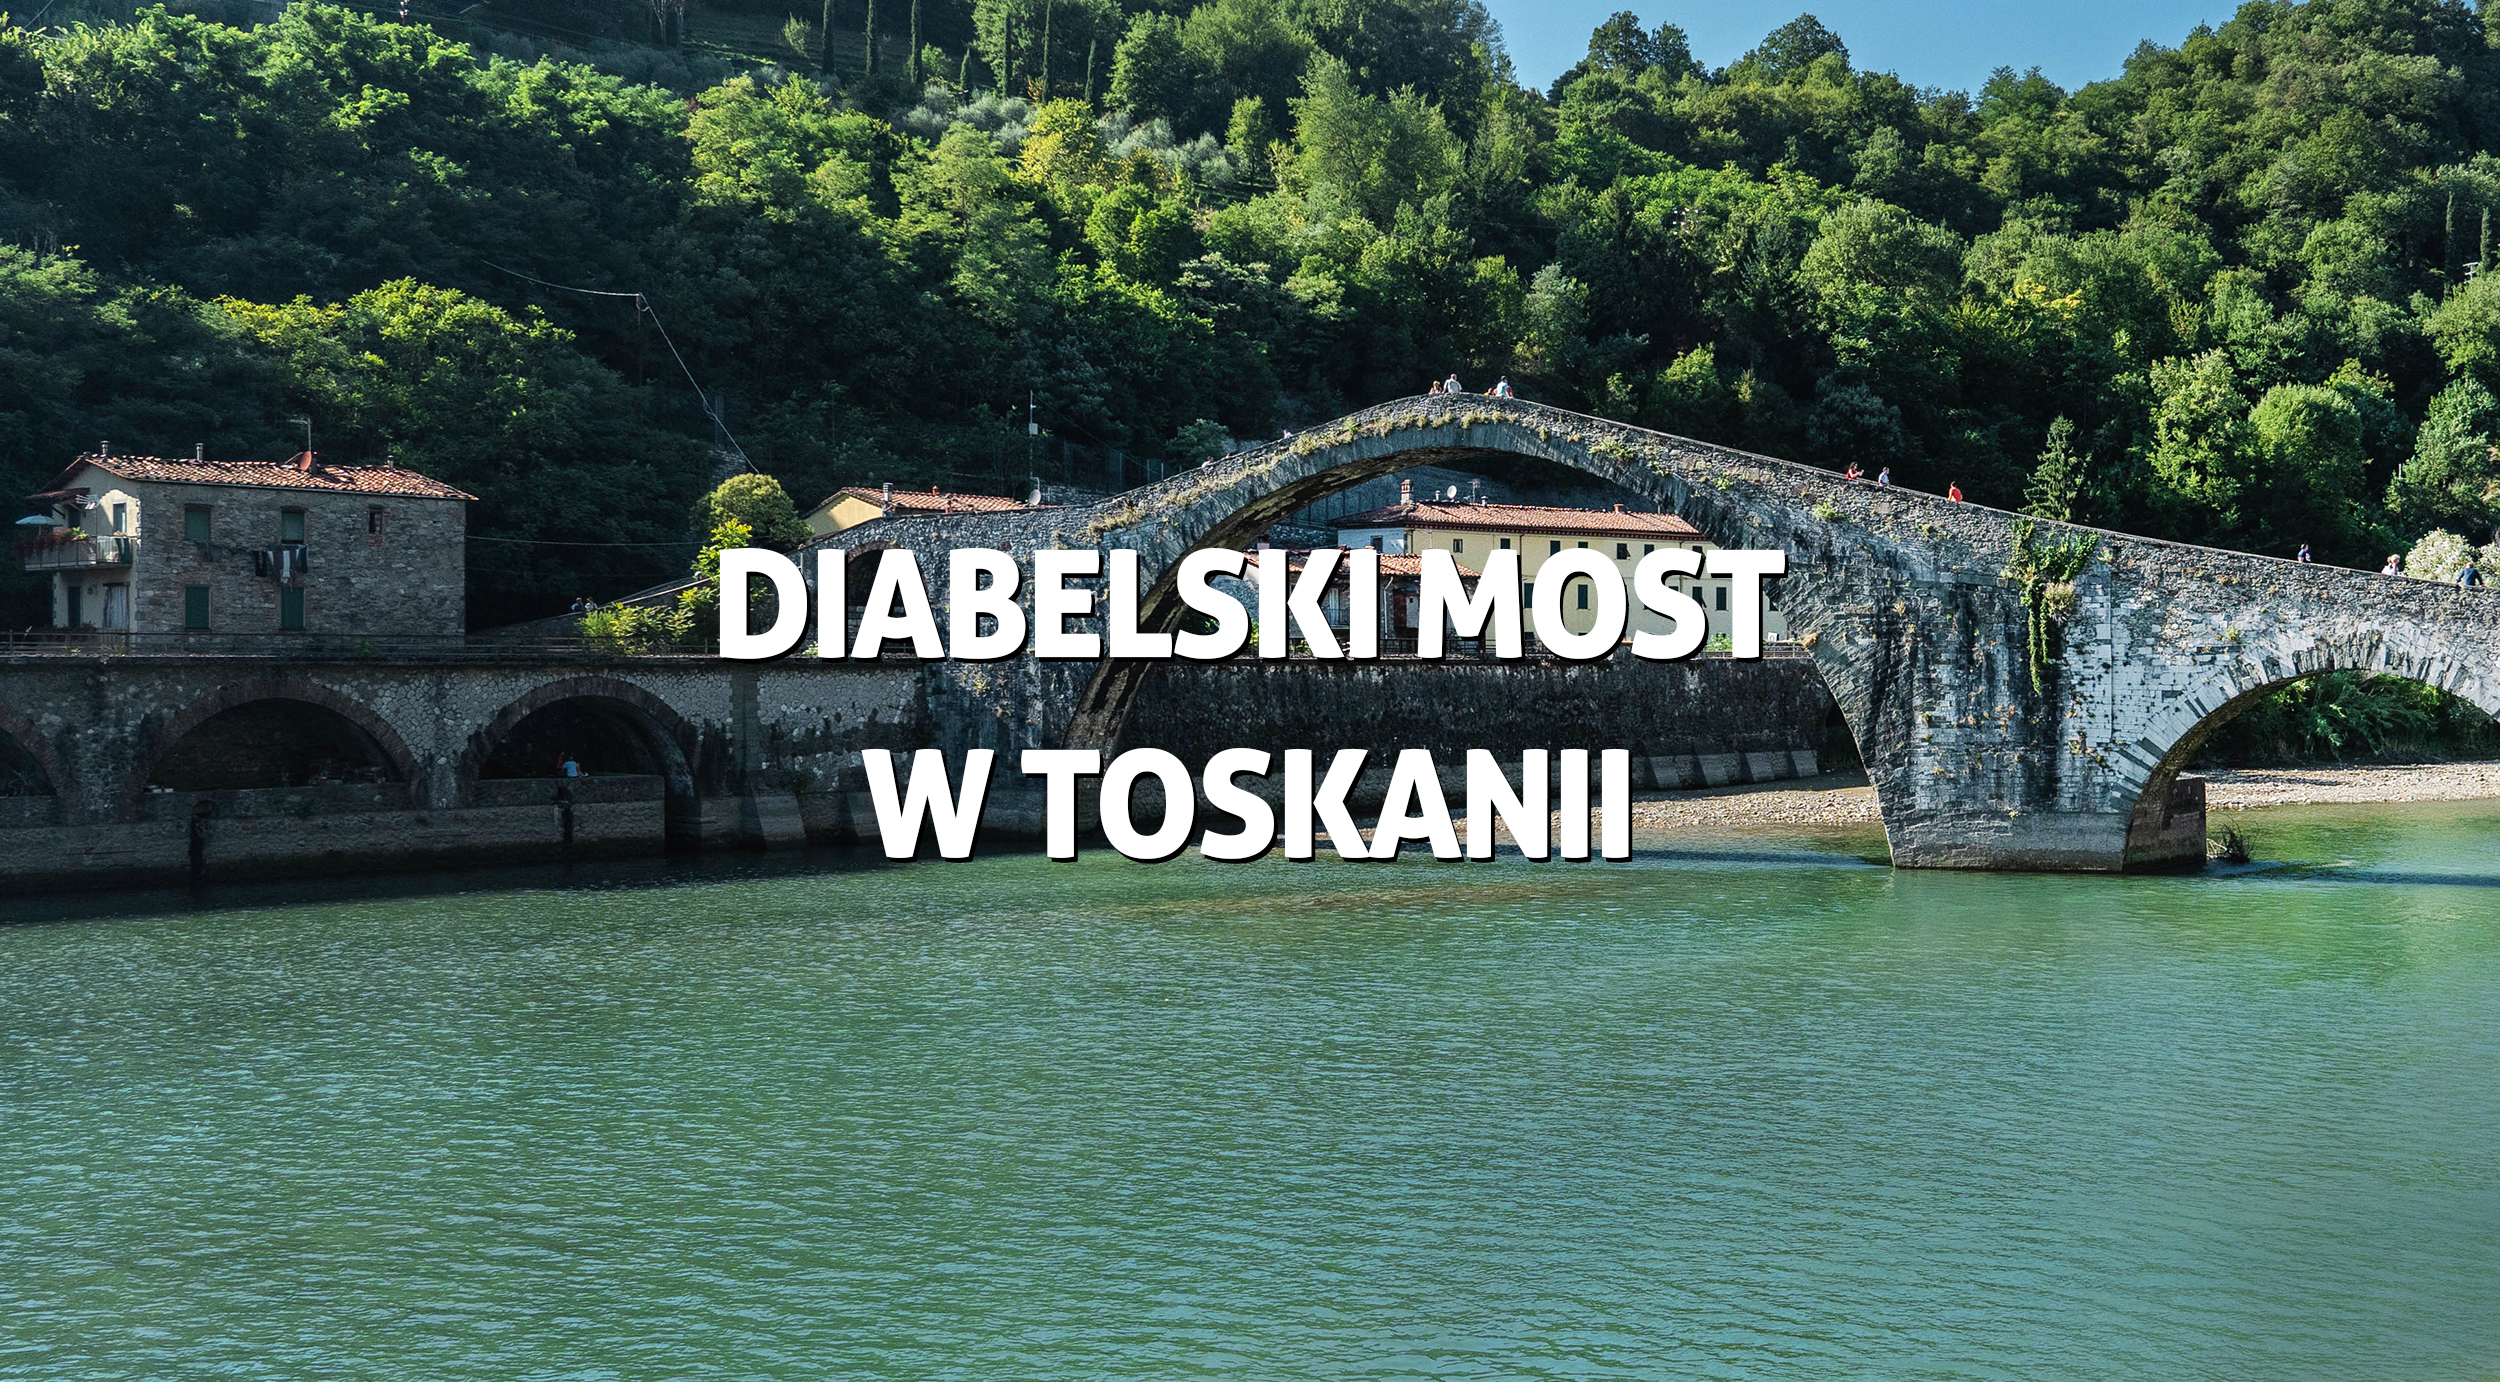 Diabelski most w Toskanii - Ponte del diavolo